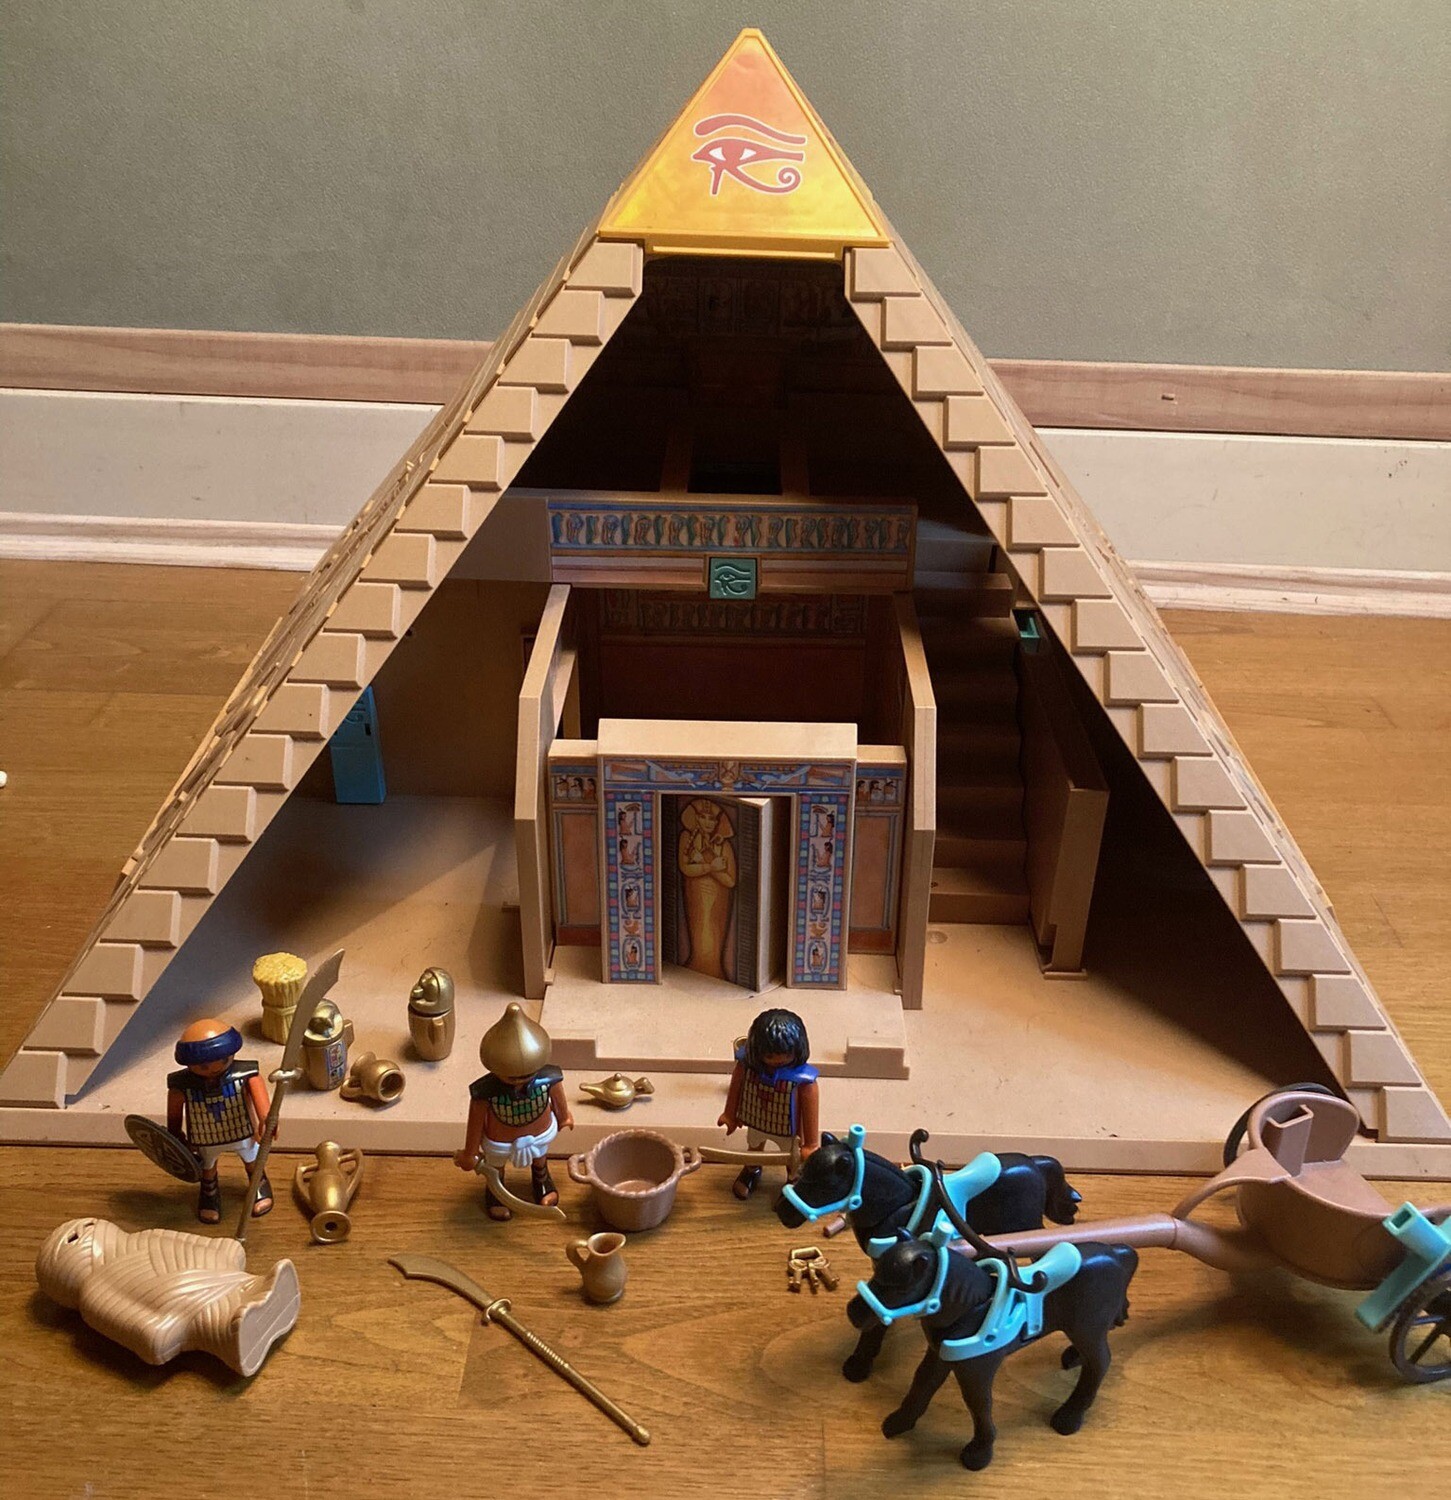 Playmobil pyramide egyptienne équipée